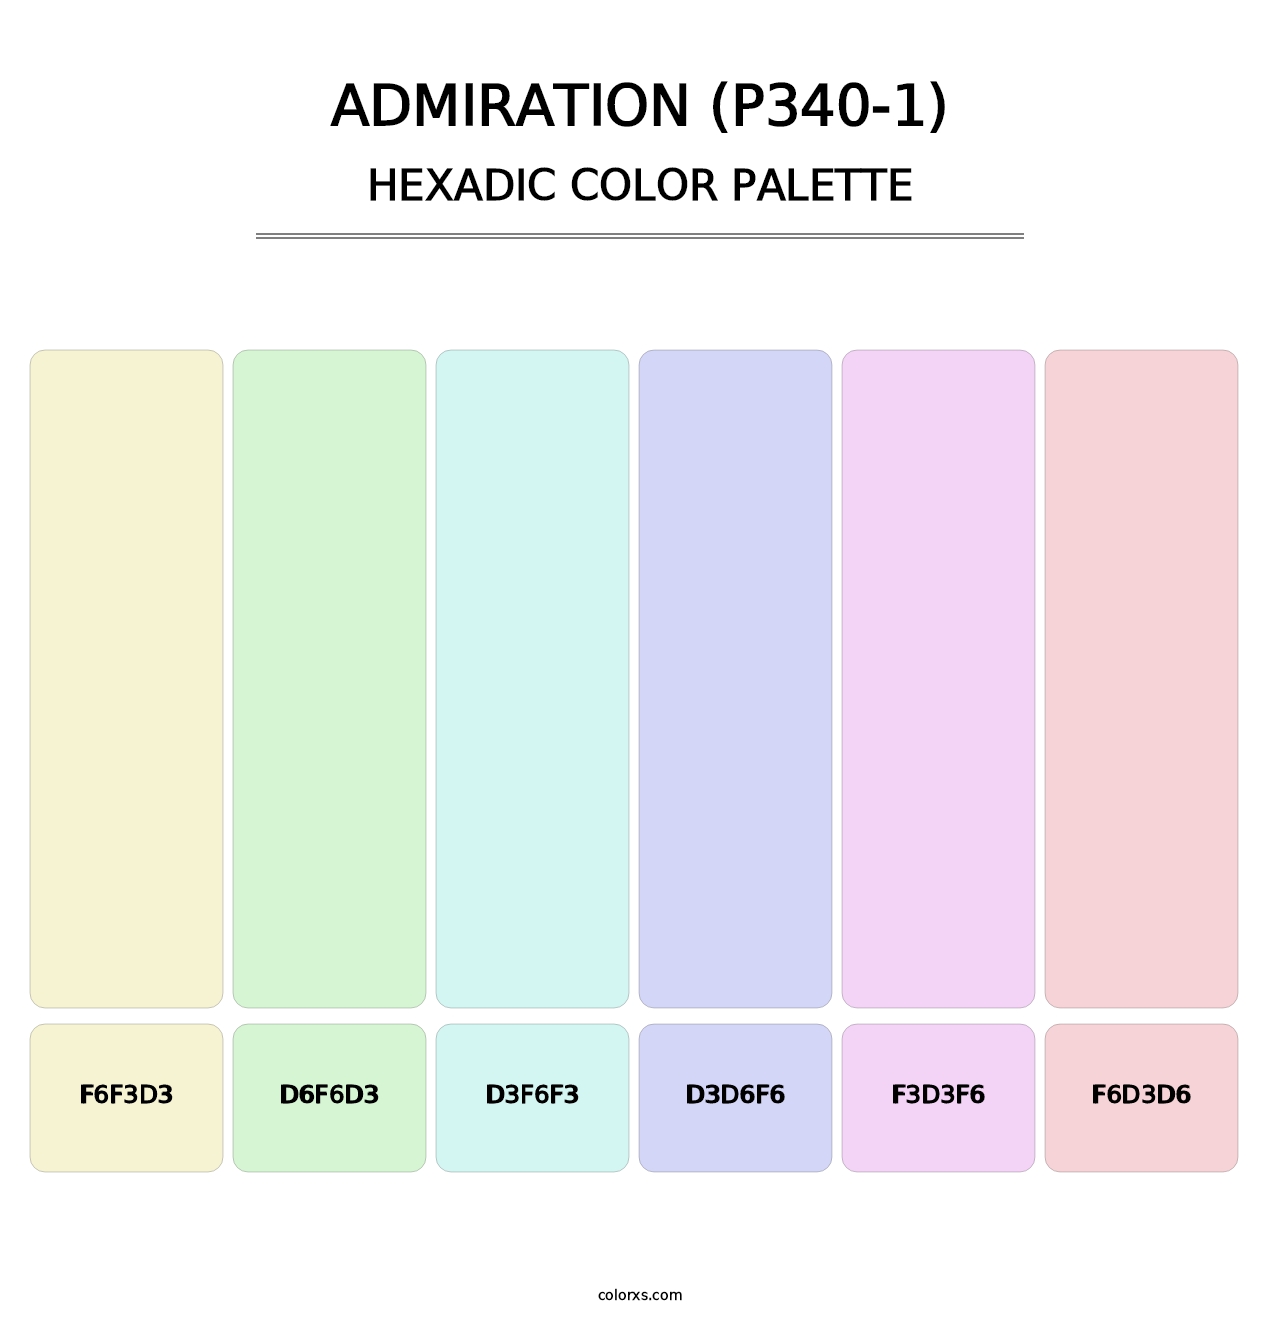 Admiration (P340-1) - Hexadic Color Palette